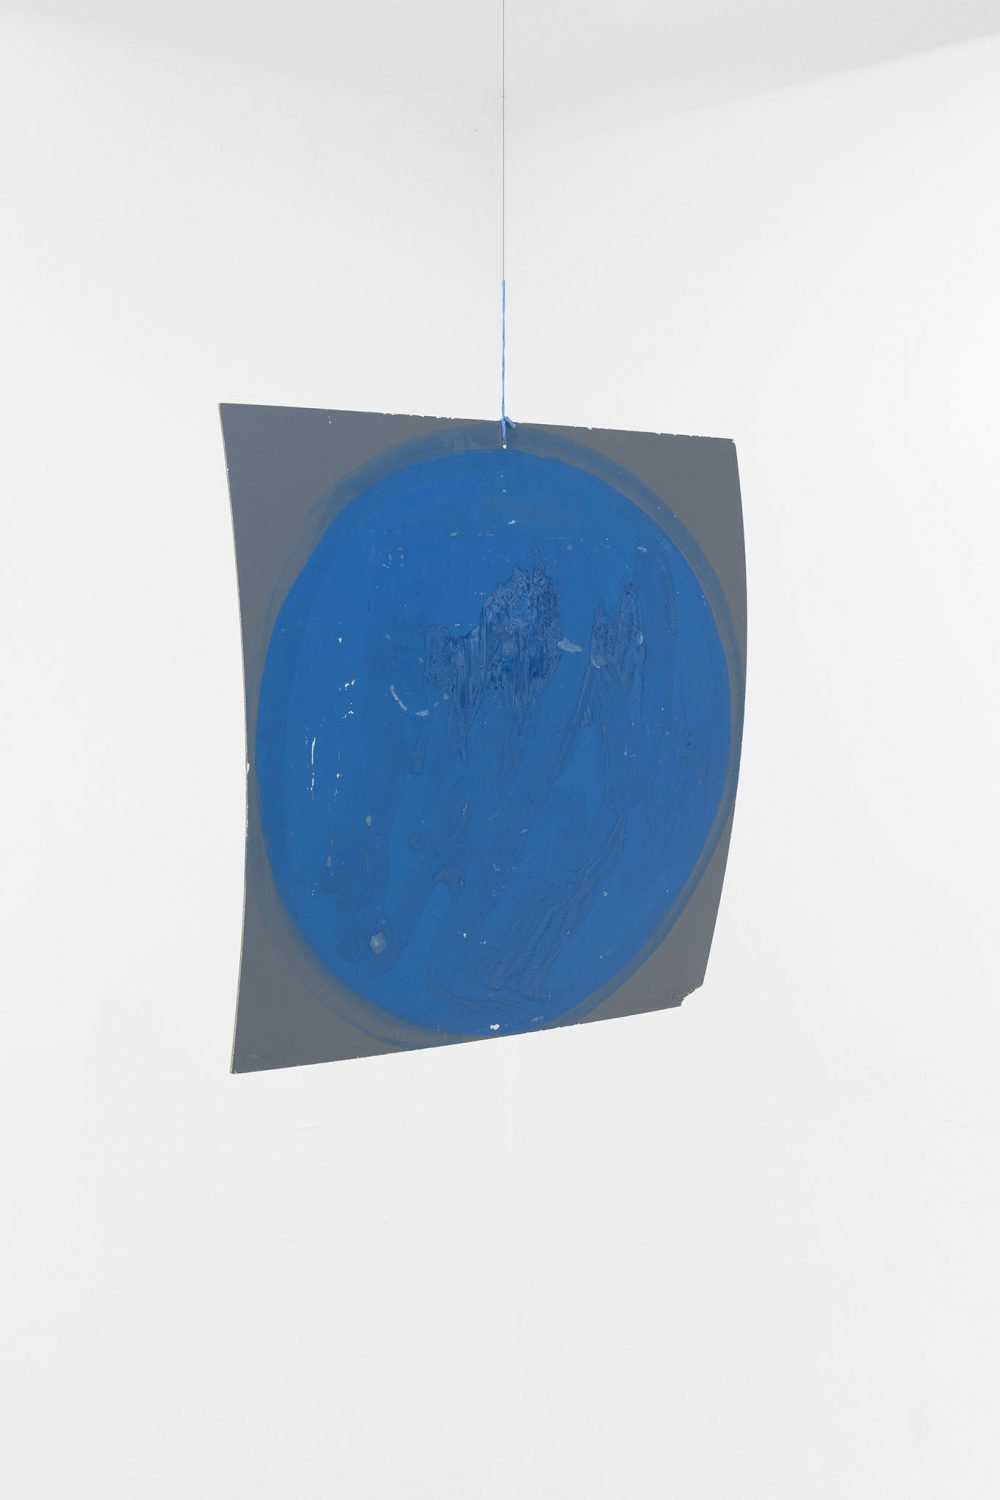 Stano FilkoFrom the cycle Astrocosmolonomogy, ca. 2000Reflective plexiglass, acrylic paint61 x 61 cmOꓘ⅃Iꟻ OИATƧ, Layr, Rome, 2019